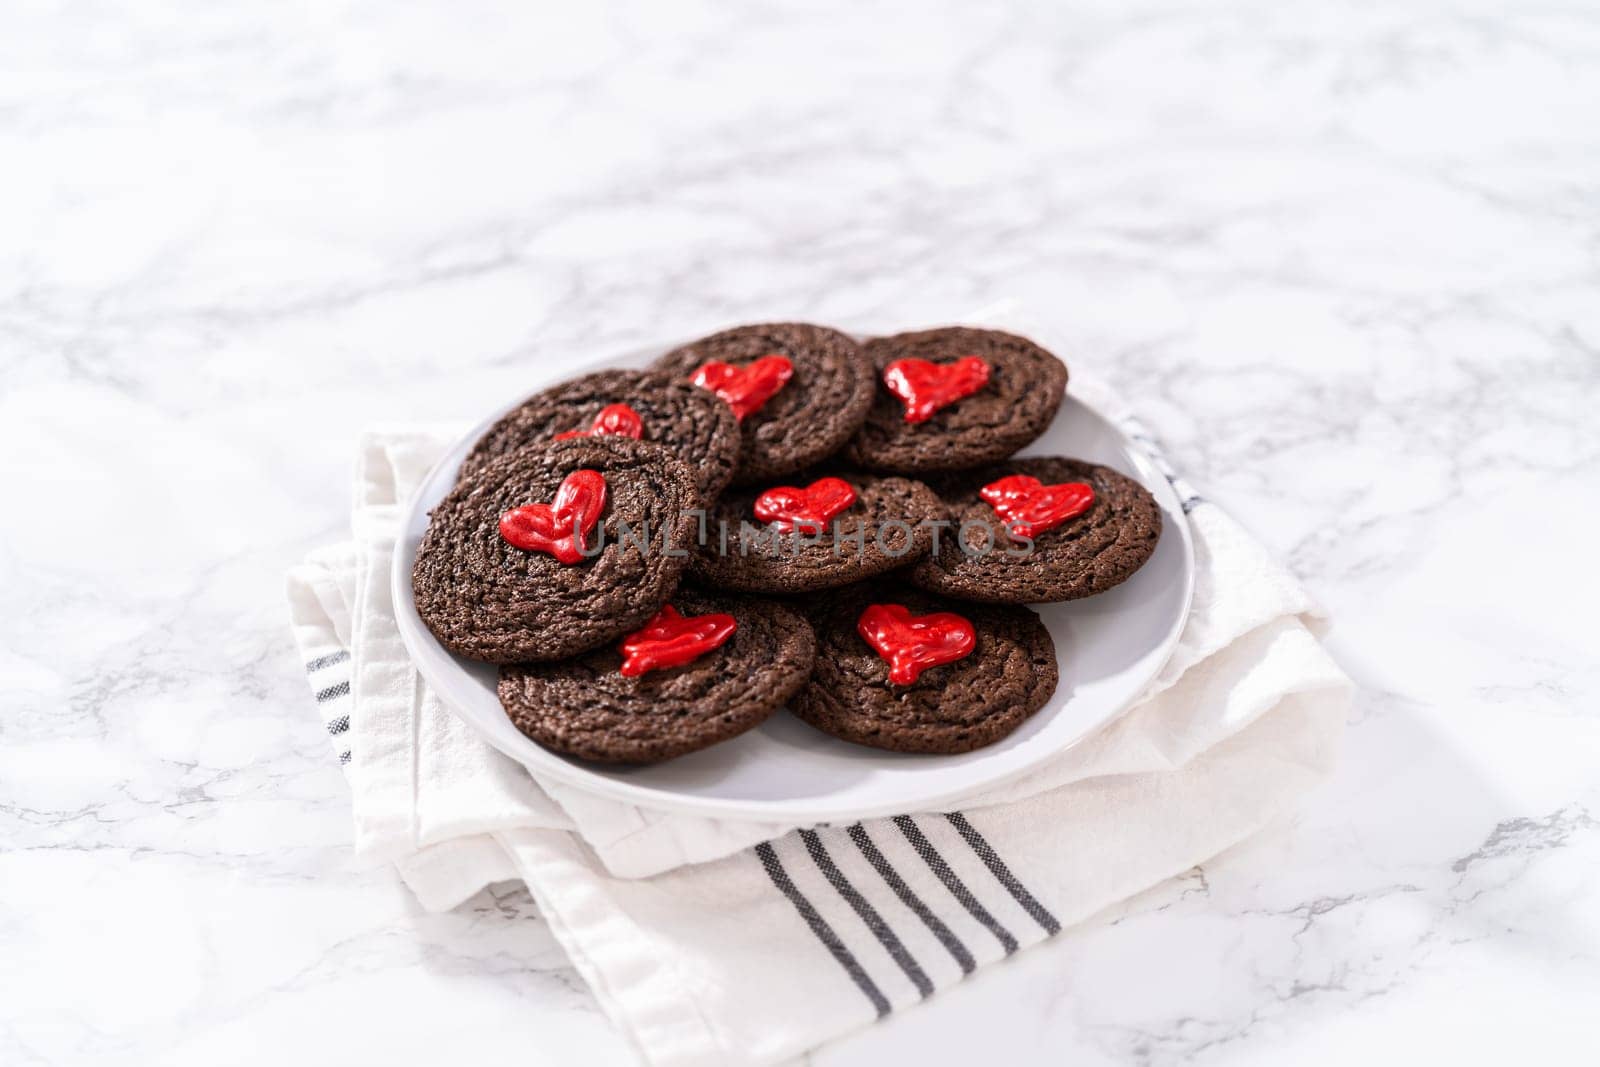 Chocolate Cookies with Chocolate Hearts by arinahabich